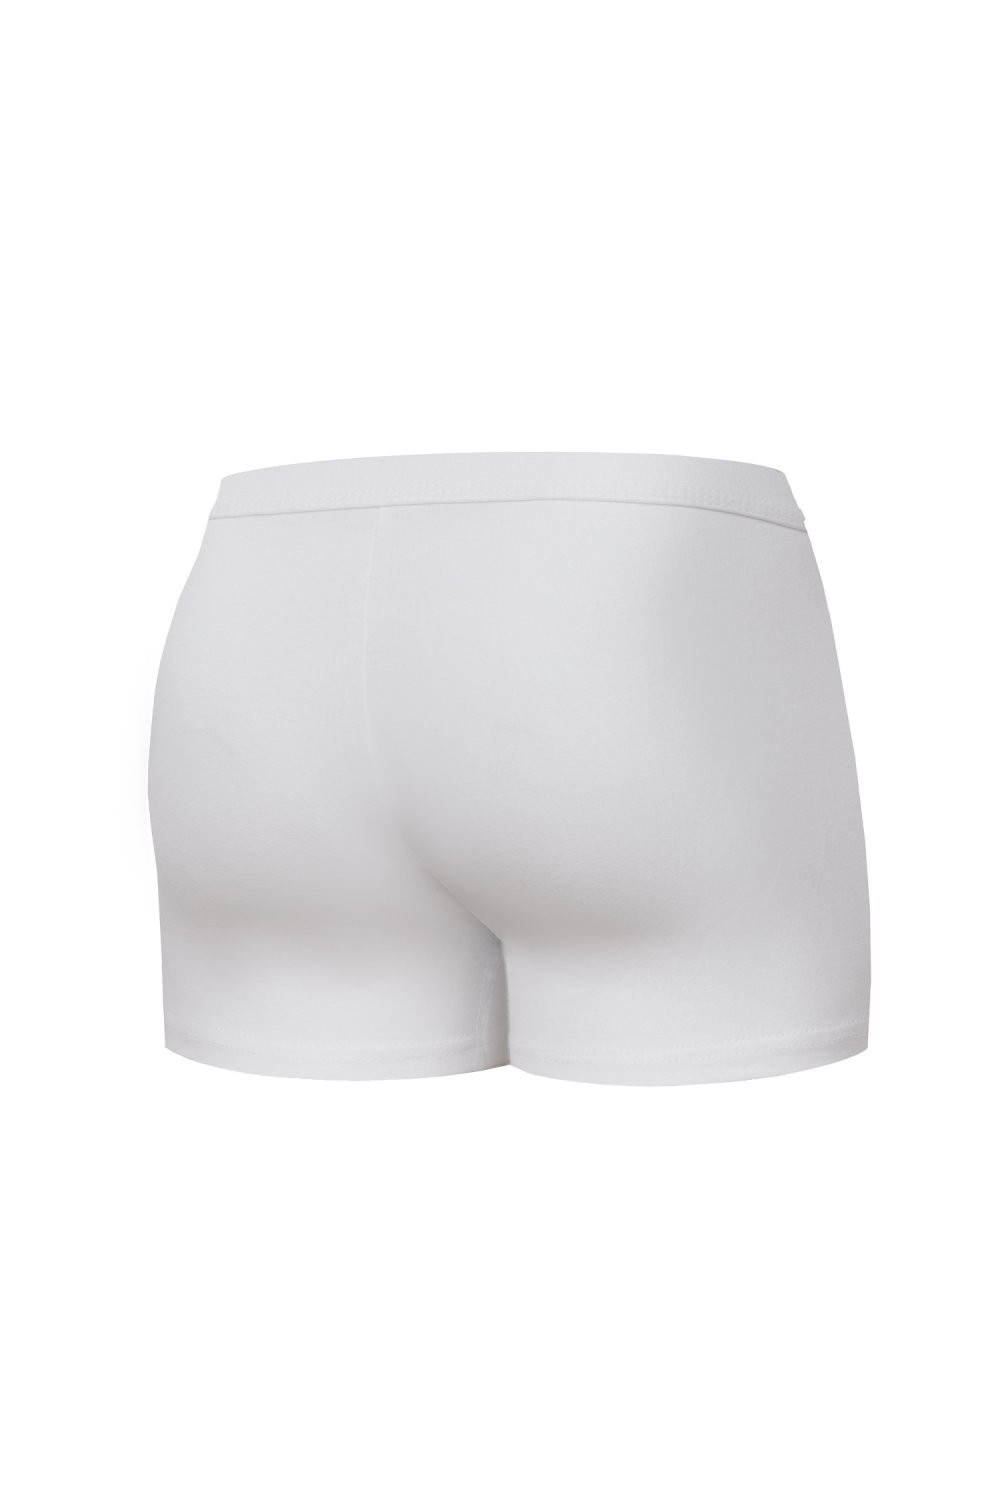 Pánské boxerky 223 Authentic mini white - CORNETTE Barva: Bílá, Velikost: S